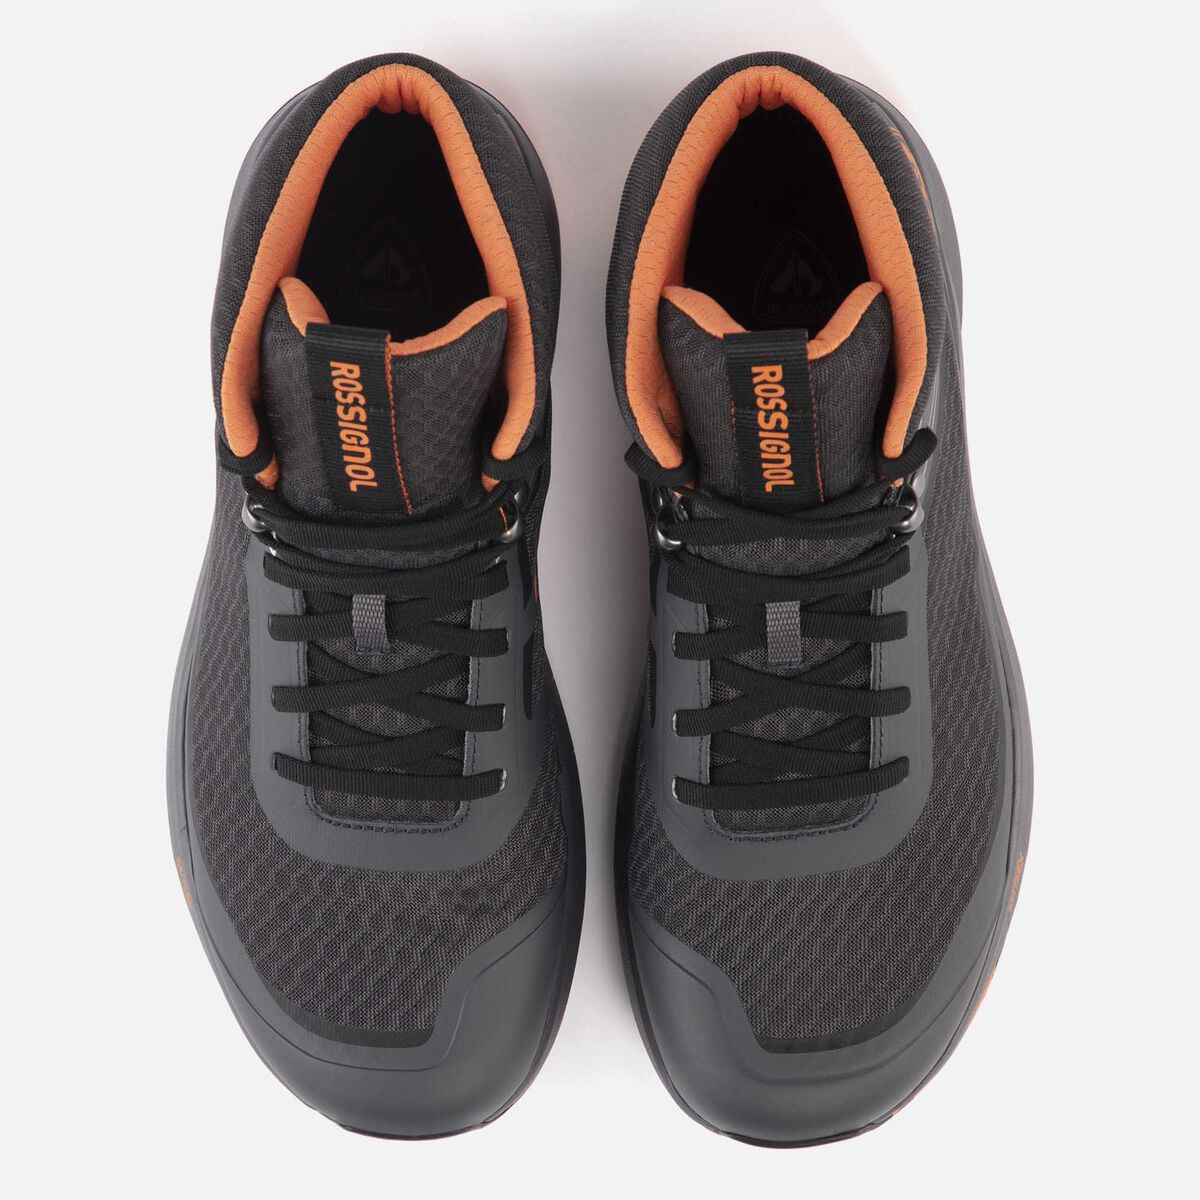 Rossignol Men's dark grey lightweight hiking shoes | Boots Men | Rossignol